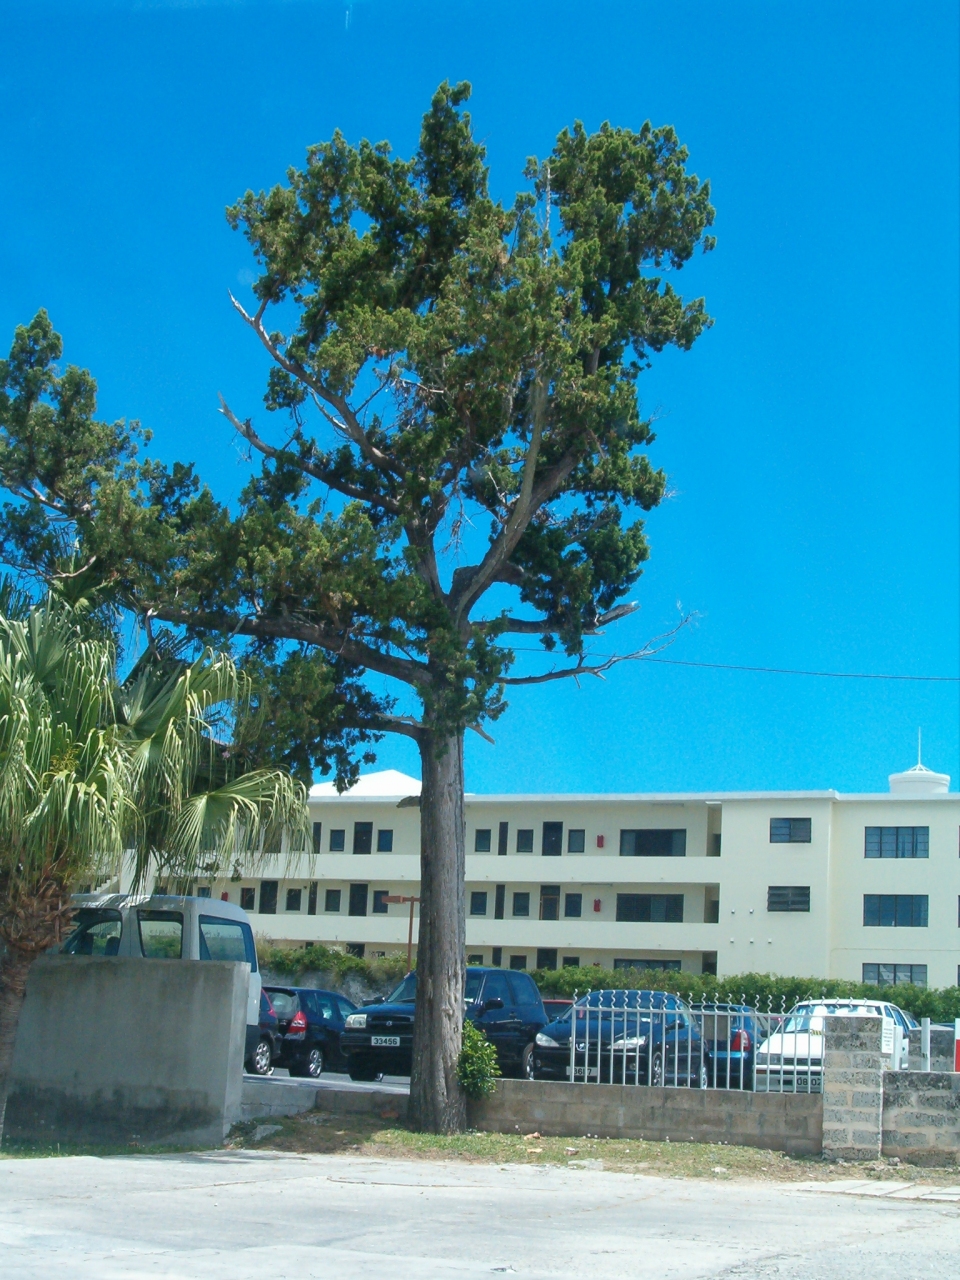 Juniperus bermudiana